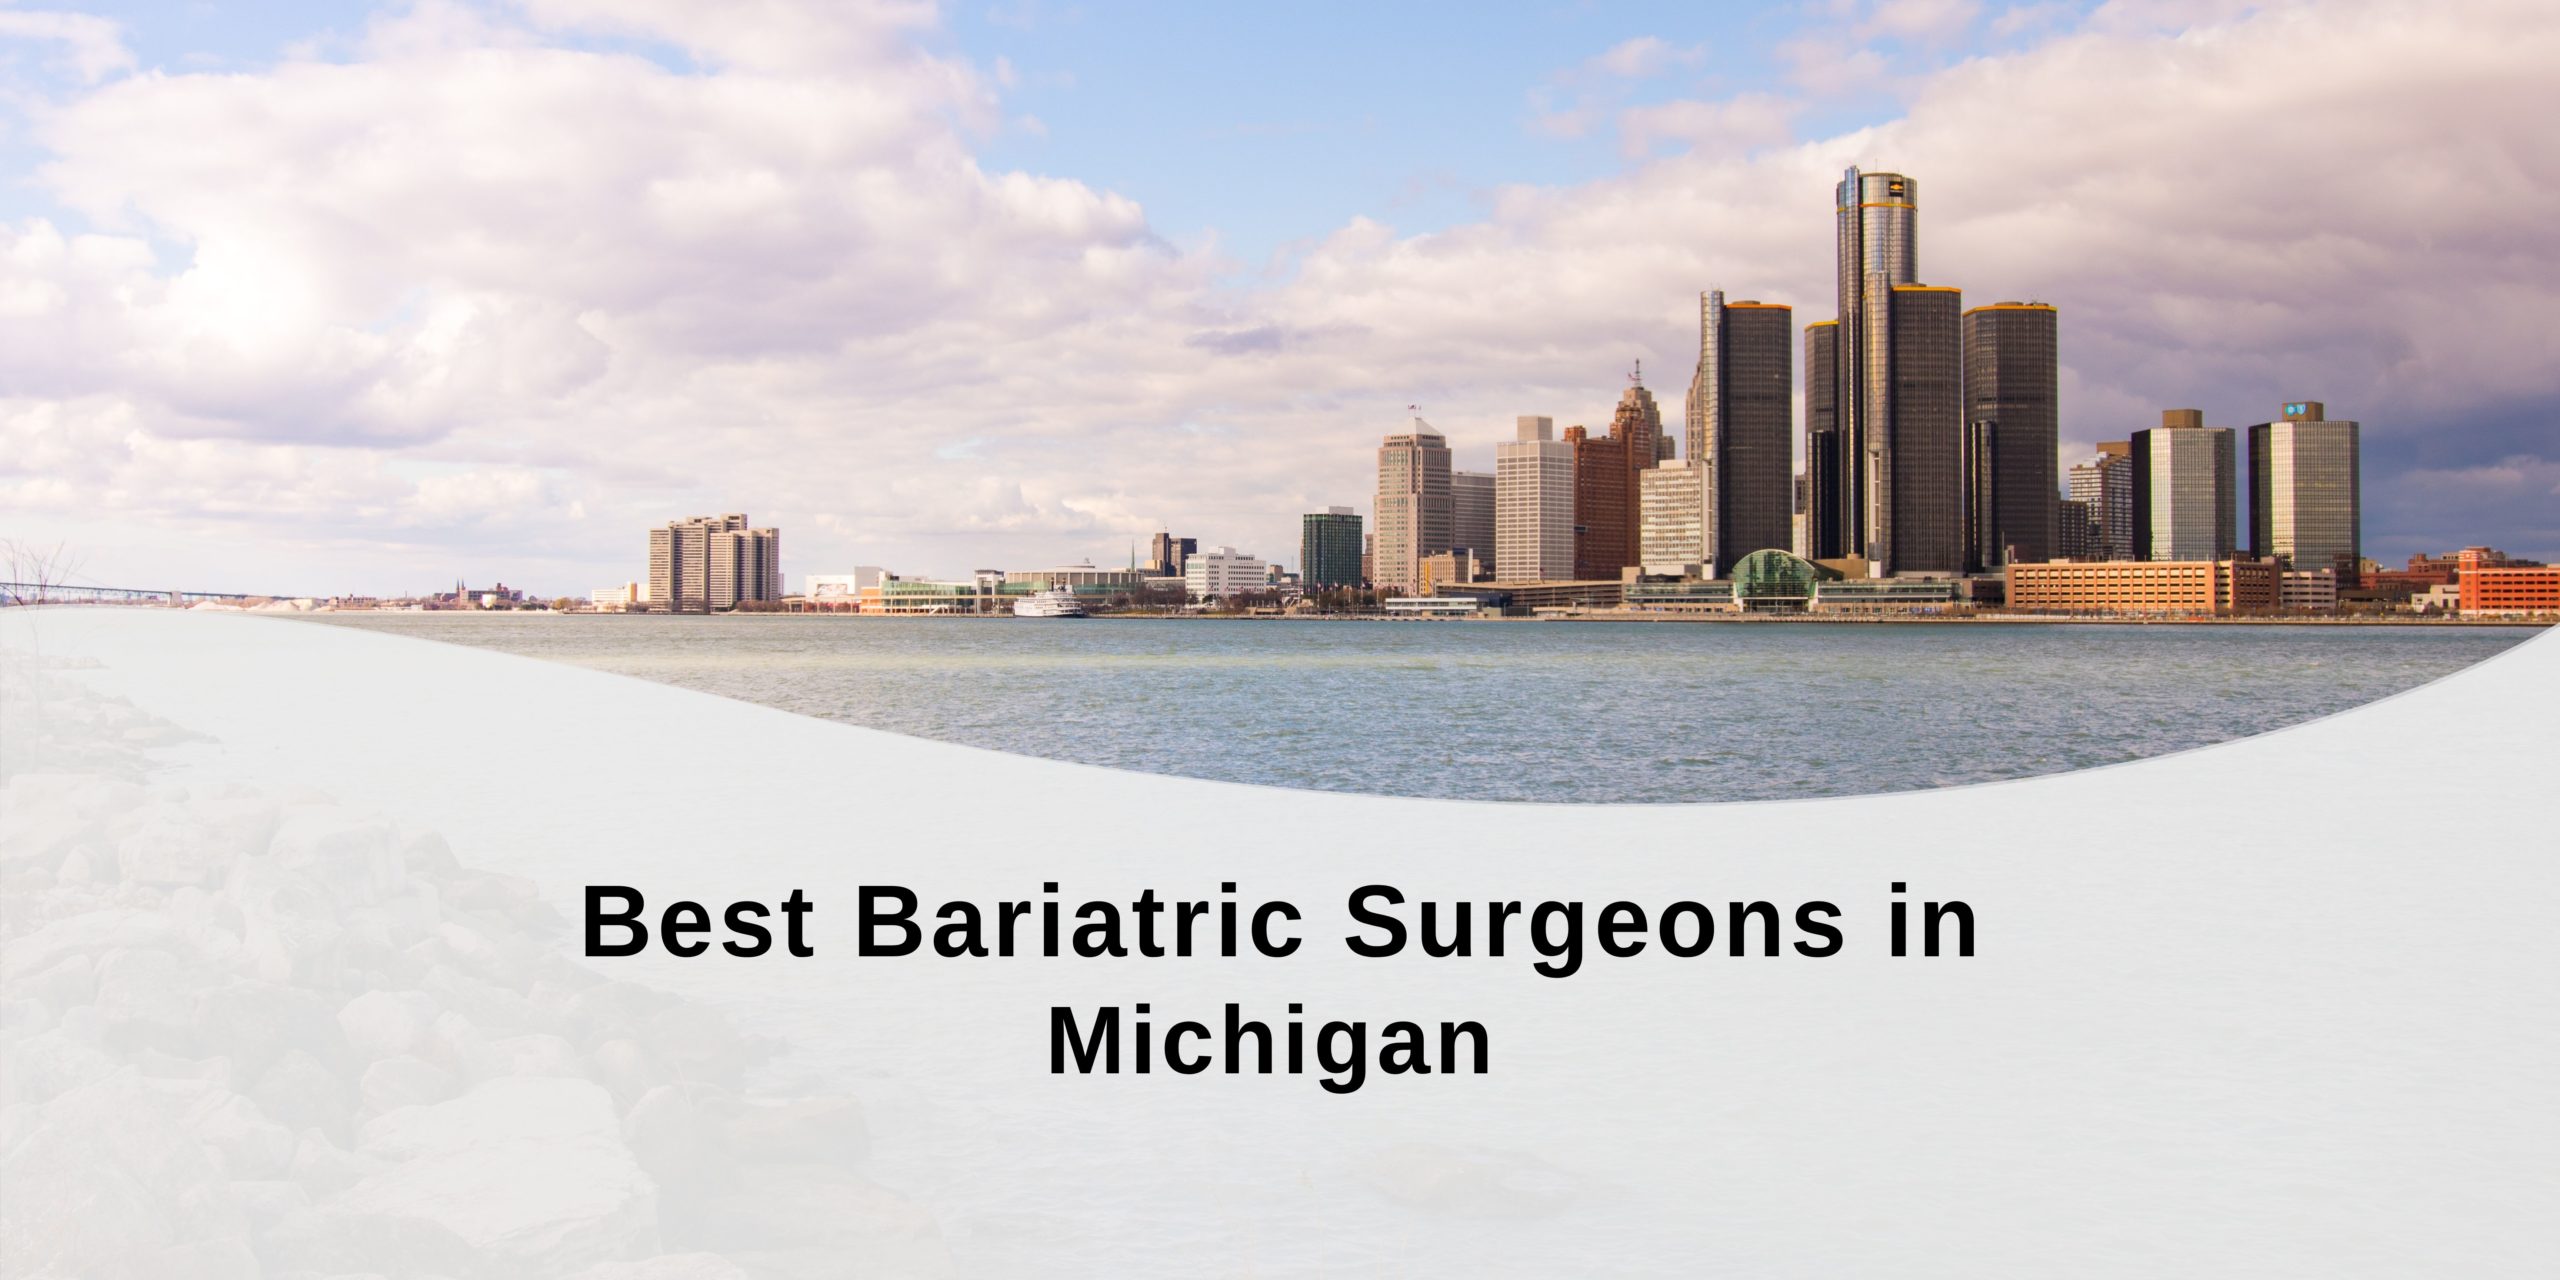 Best Bariatric Surgeons in Michigan